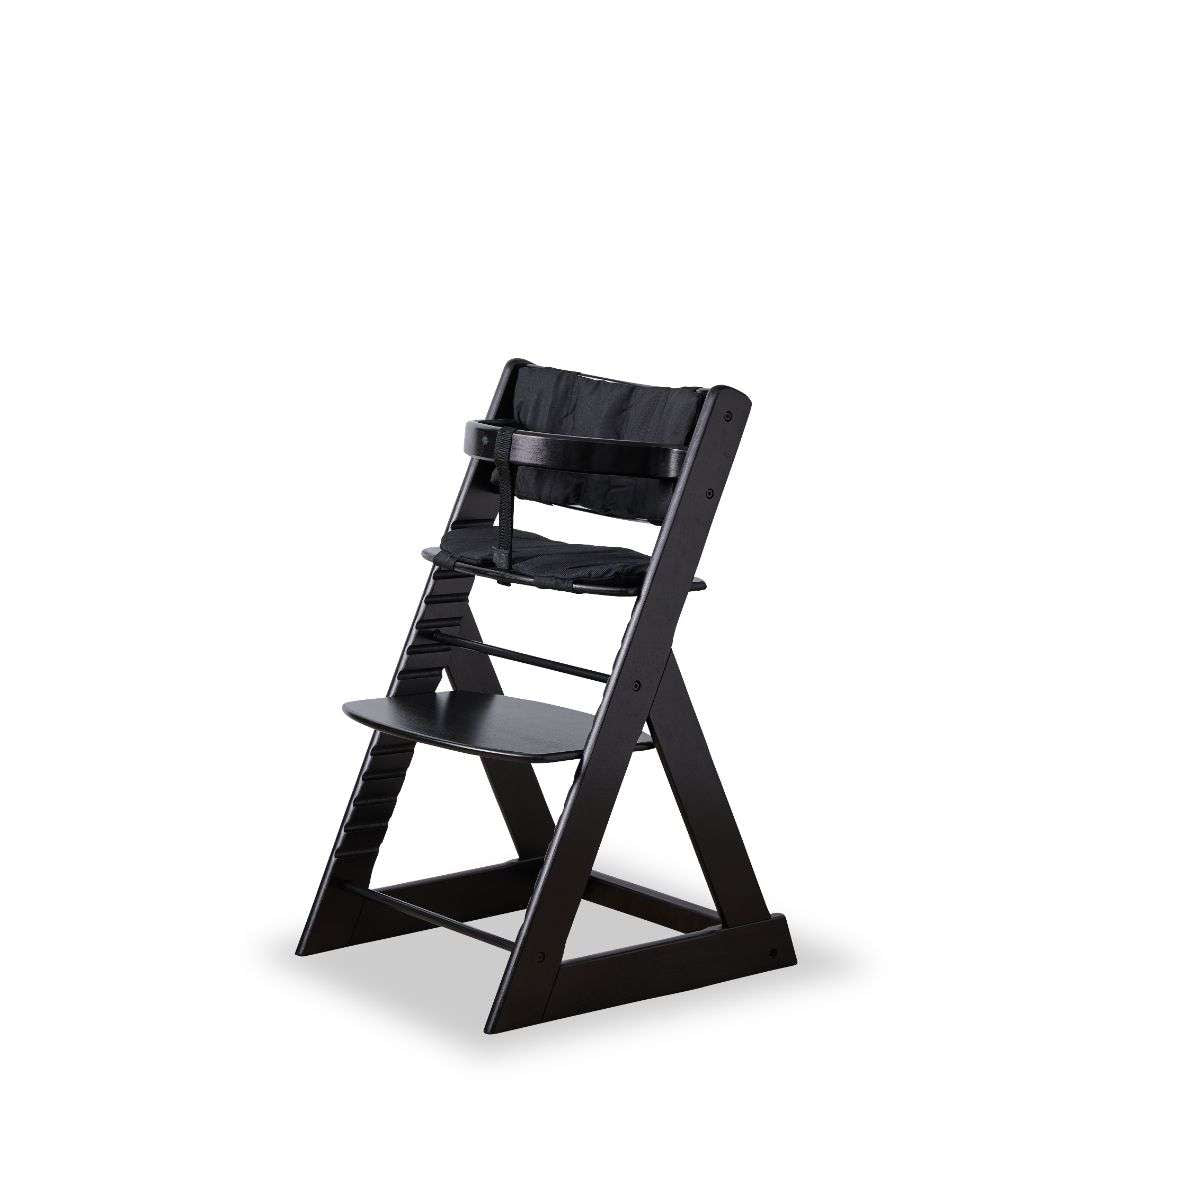 Soho Wooden Highchair - Black